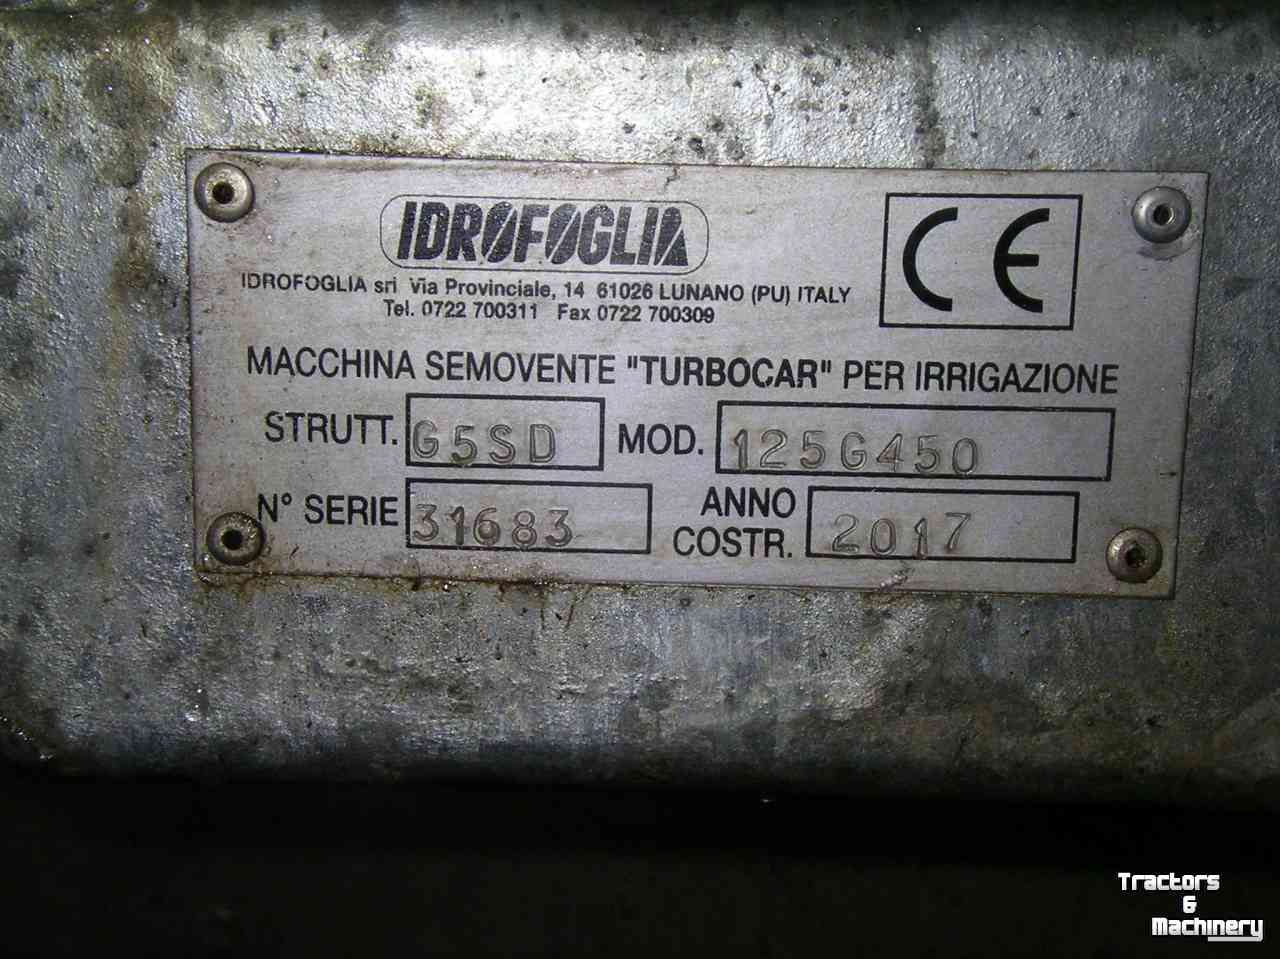 Irrigation hose reel Idrofoglia 125g450